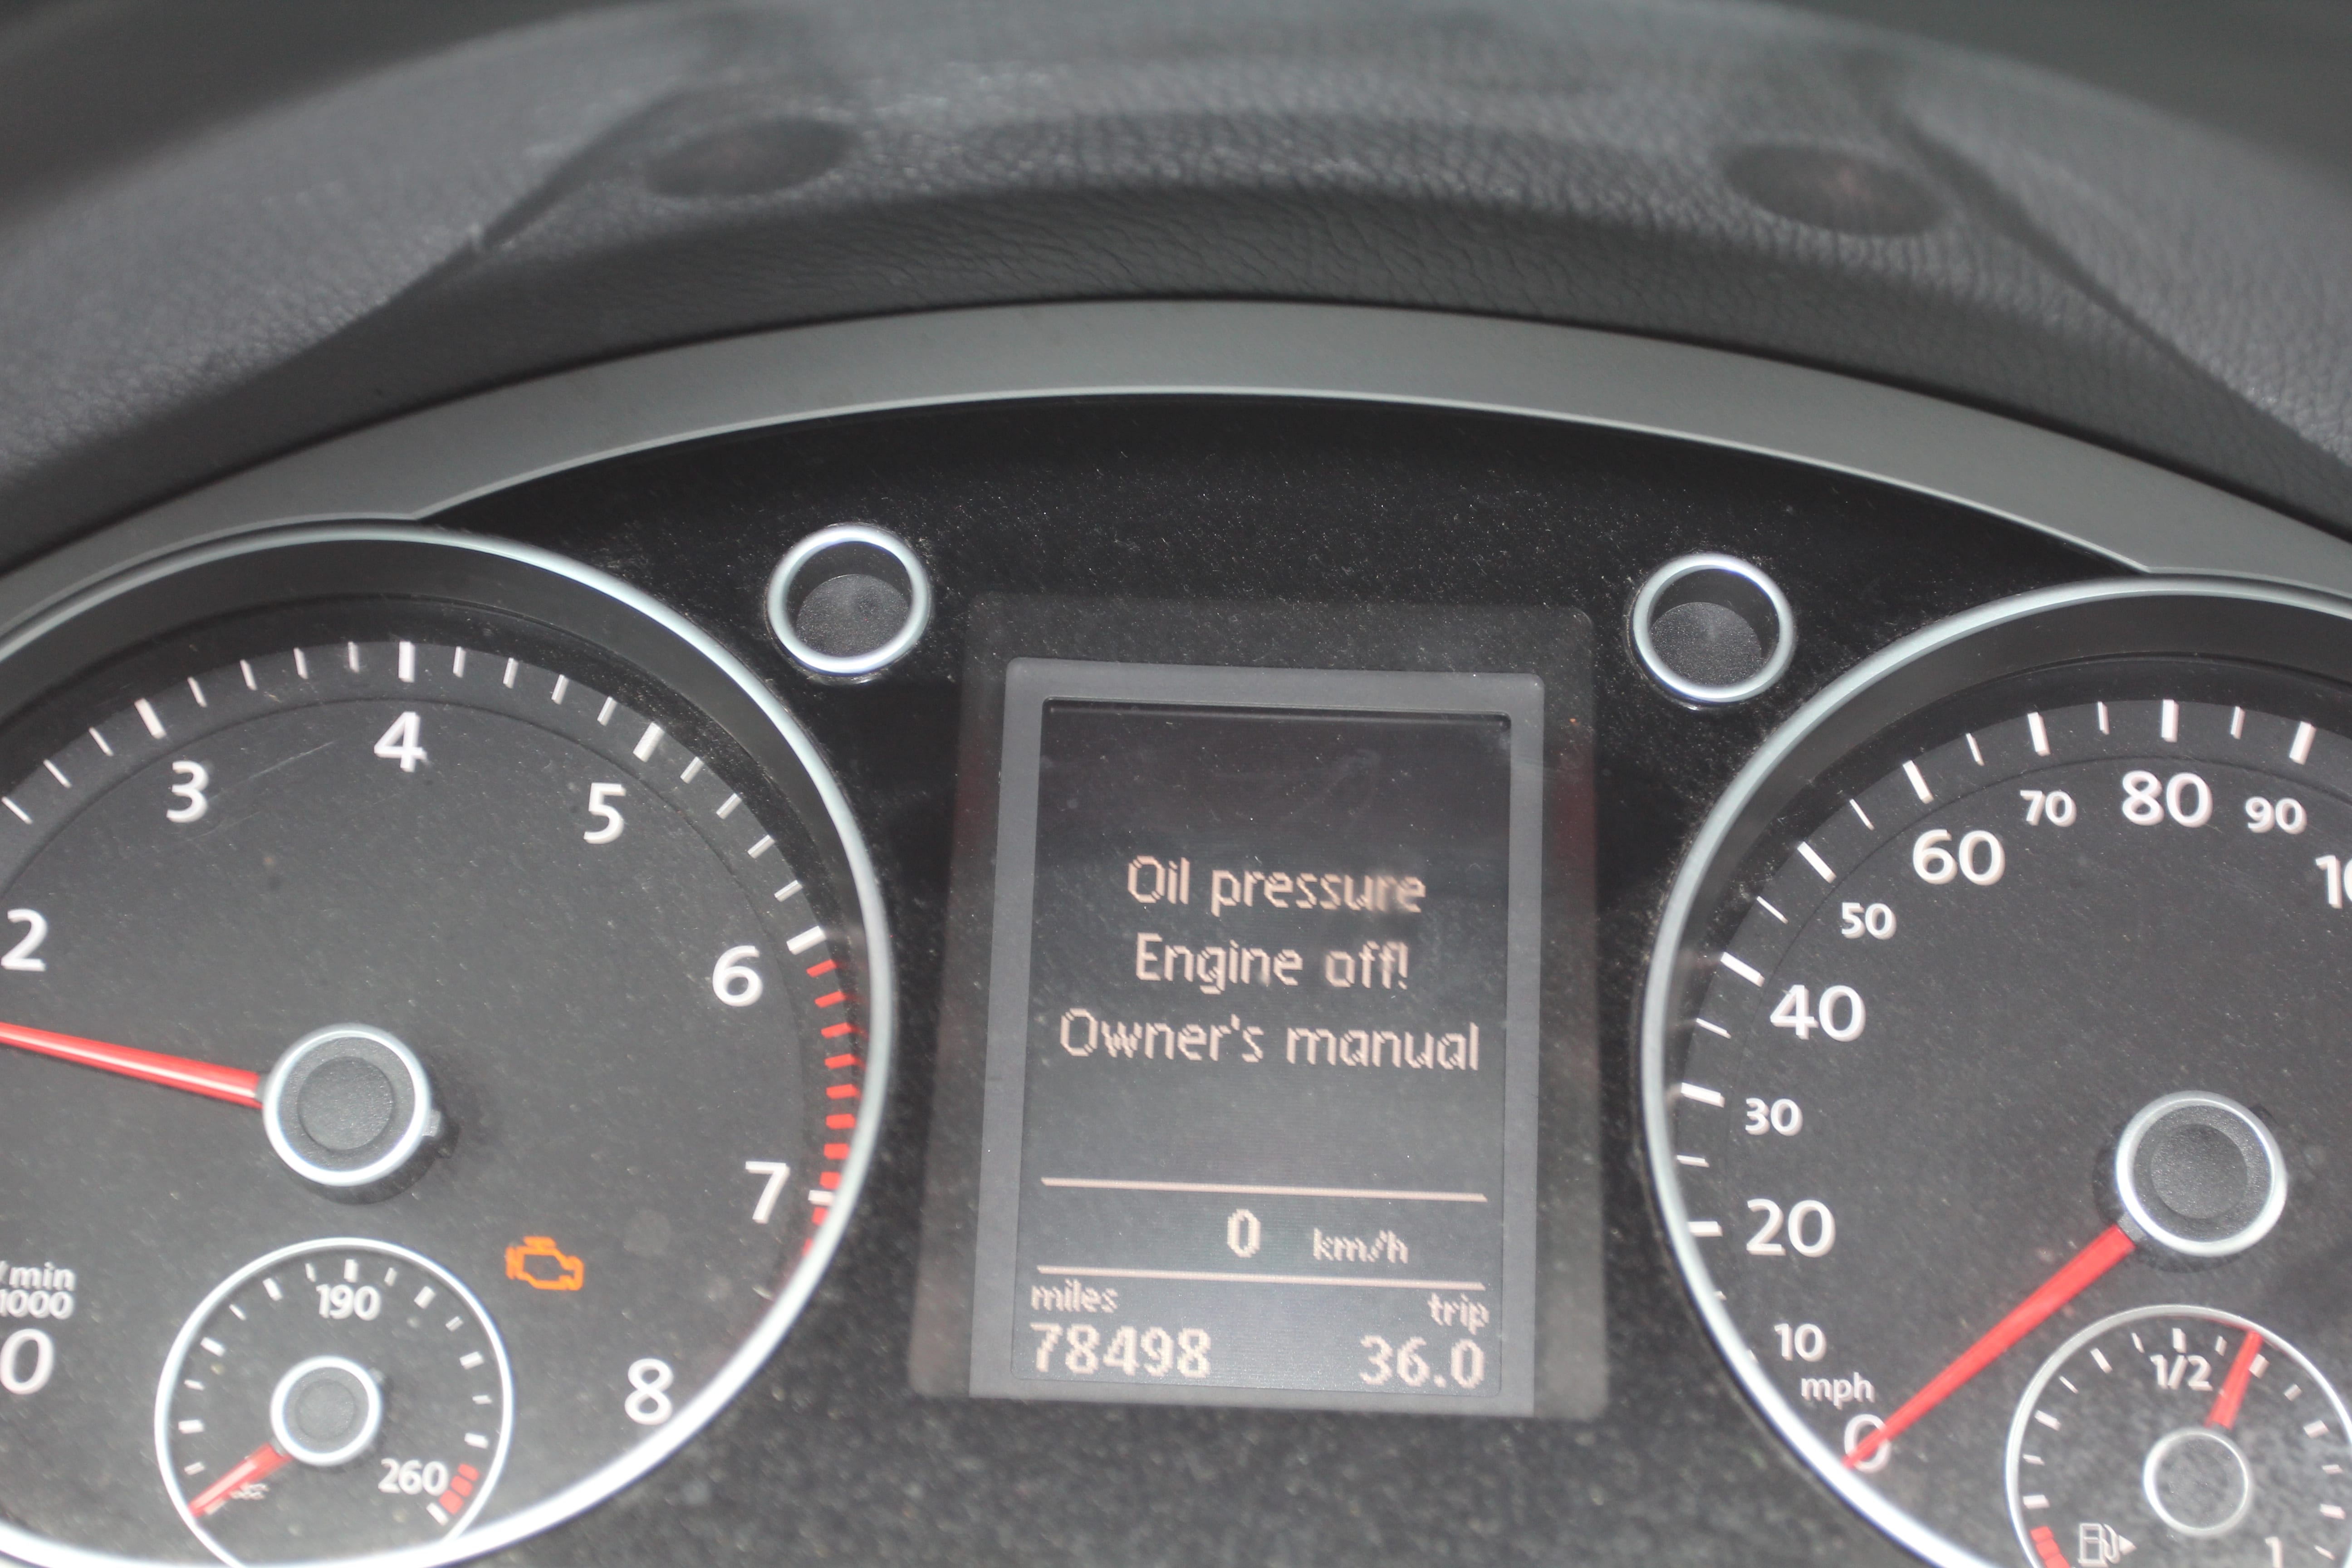 oil-pressure-warning-vw-volkswagen-cc-tsi-2-liter-ccta-engine